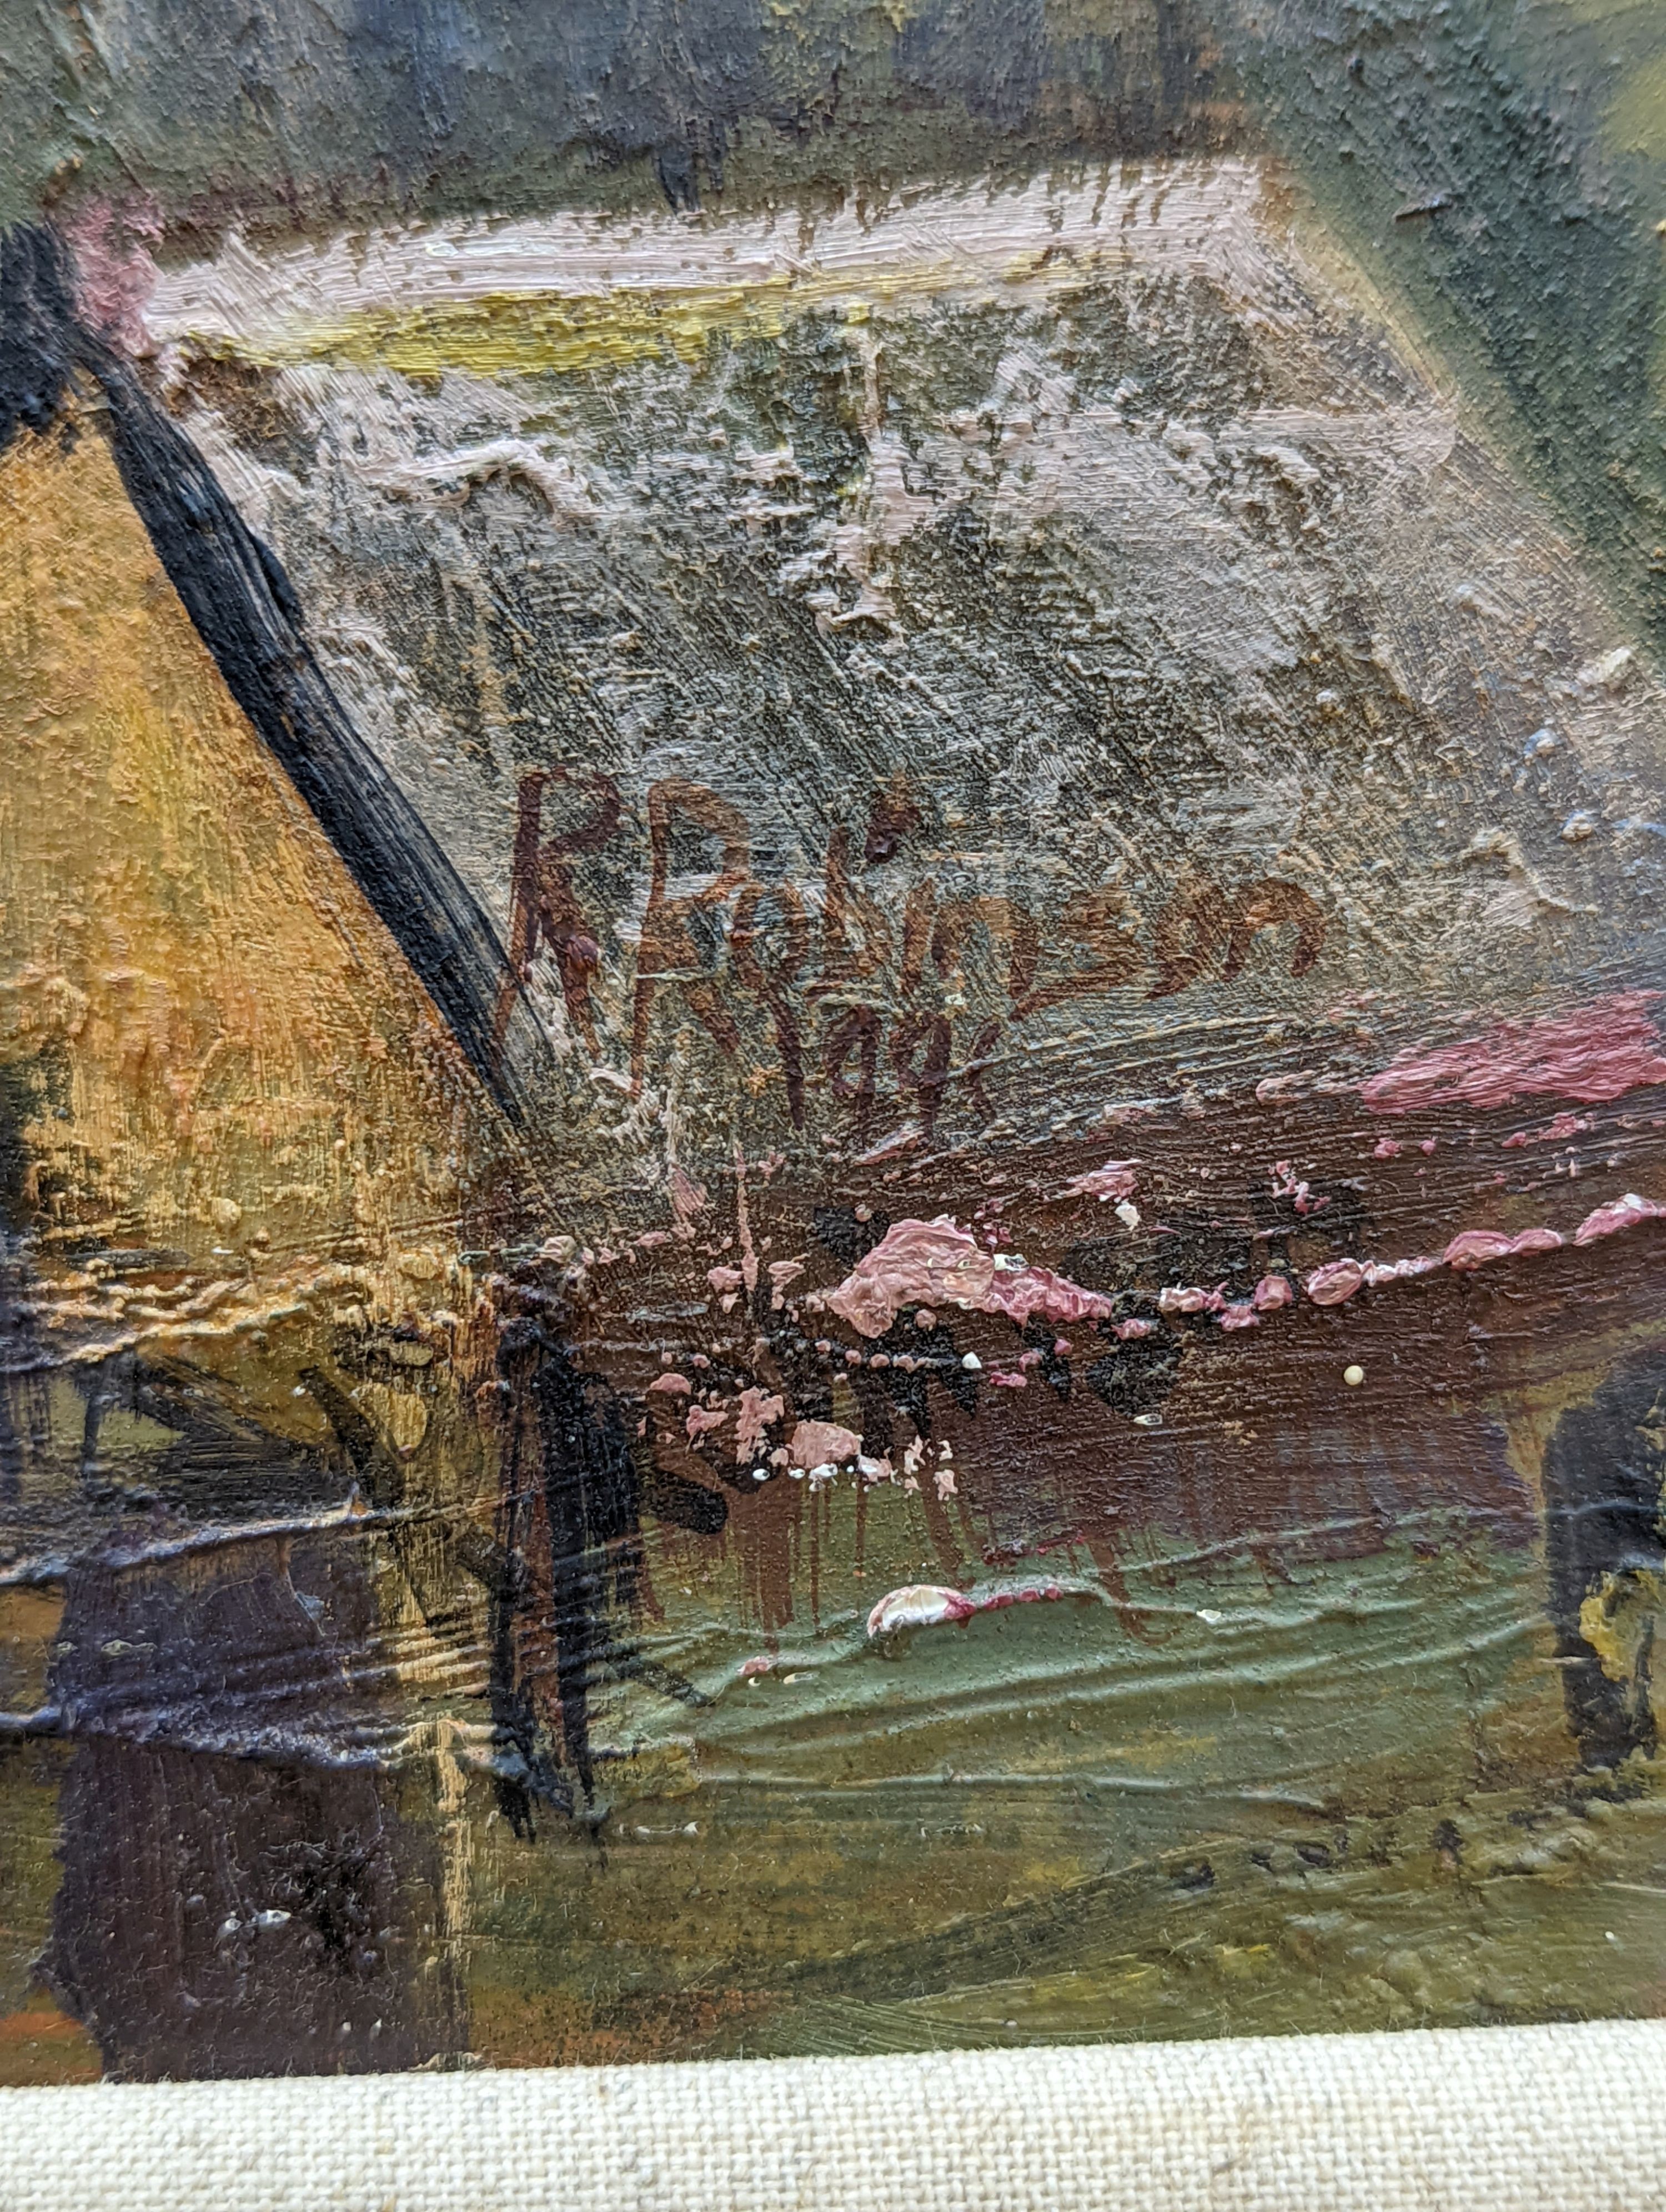 R. Robinson, oil on board, Coastal landscape with castle, 39 x 90cm